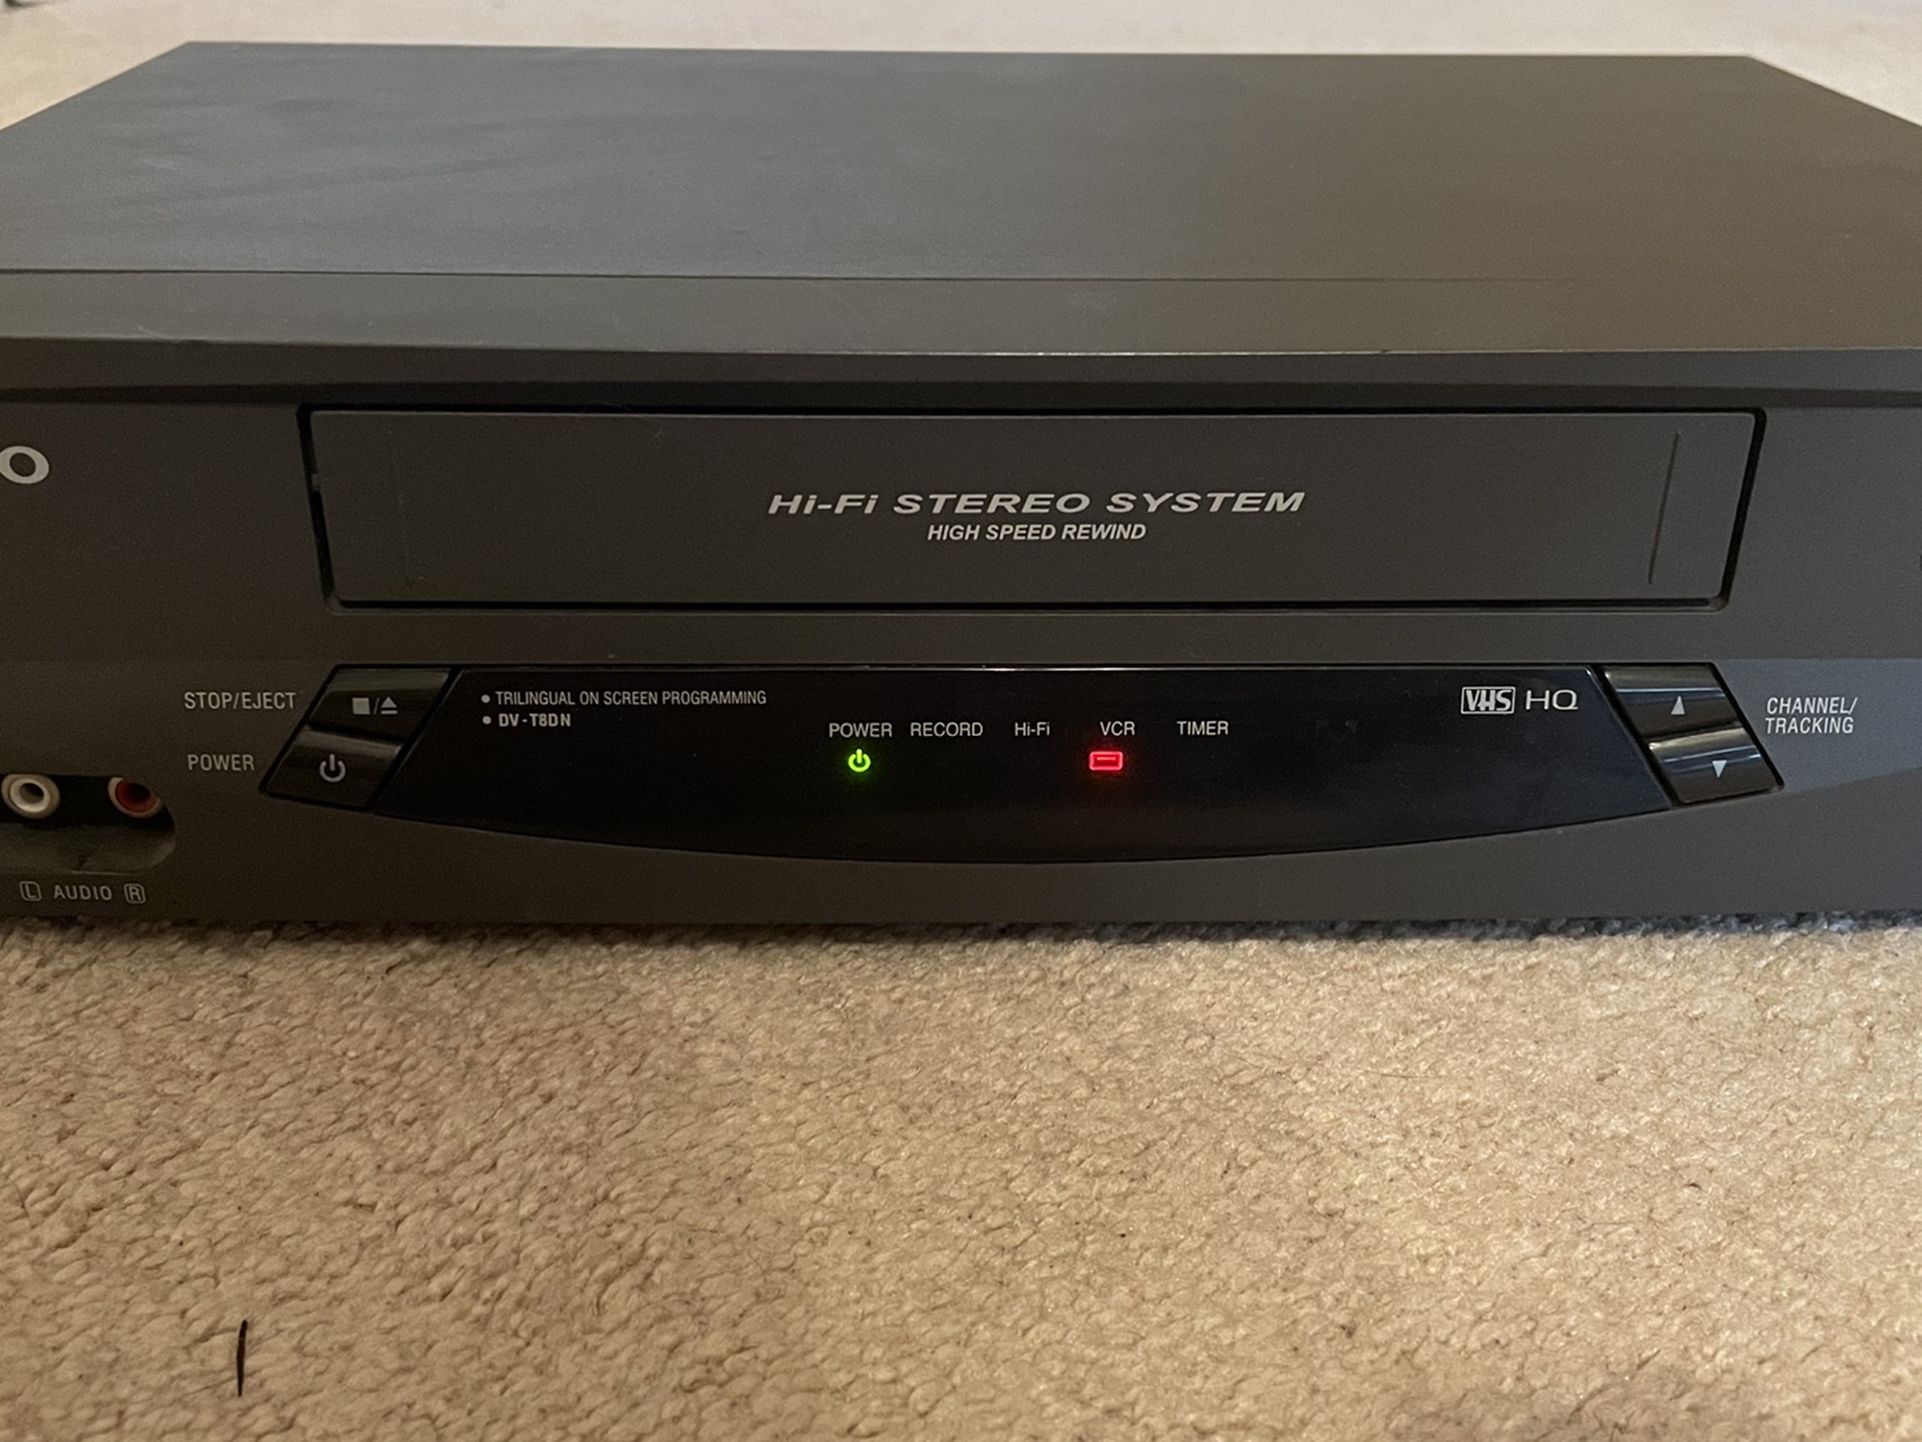 VHS VCR + Remote